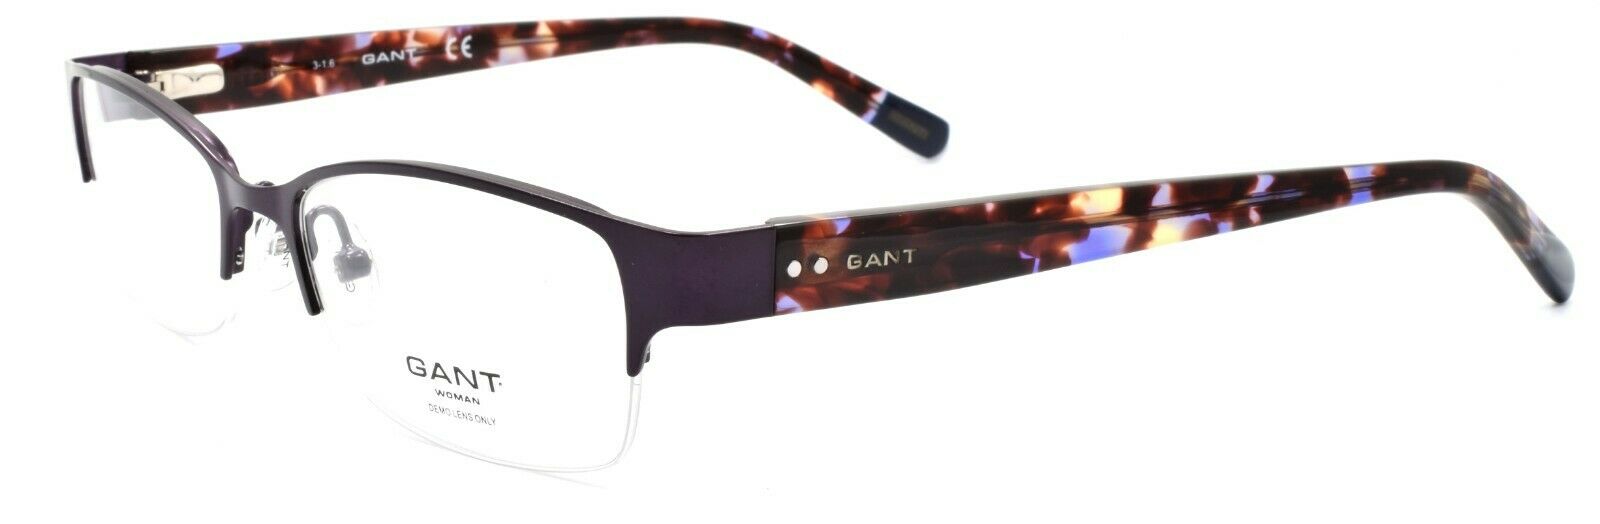 1-GANT GW Eliza SPUR Women's Half-rim Eyeglasses Frames 51-17-135 Satin Purple-715583703421-IKSpecs